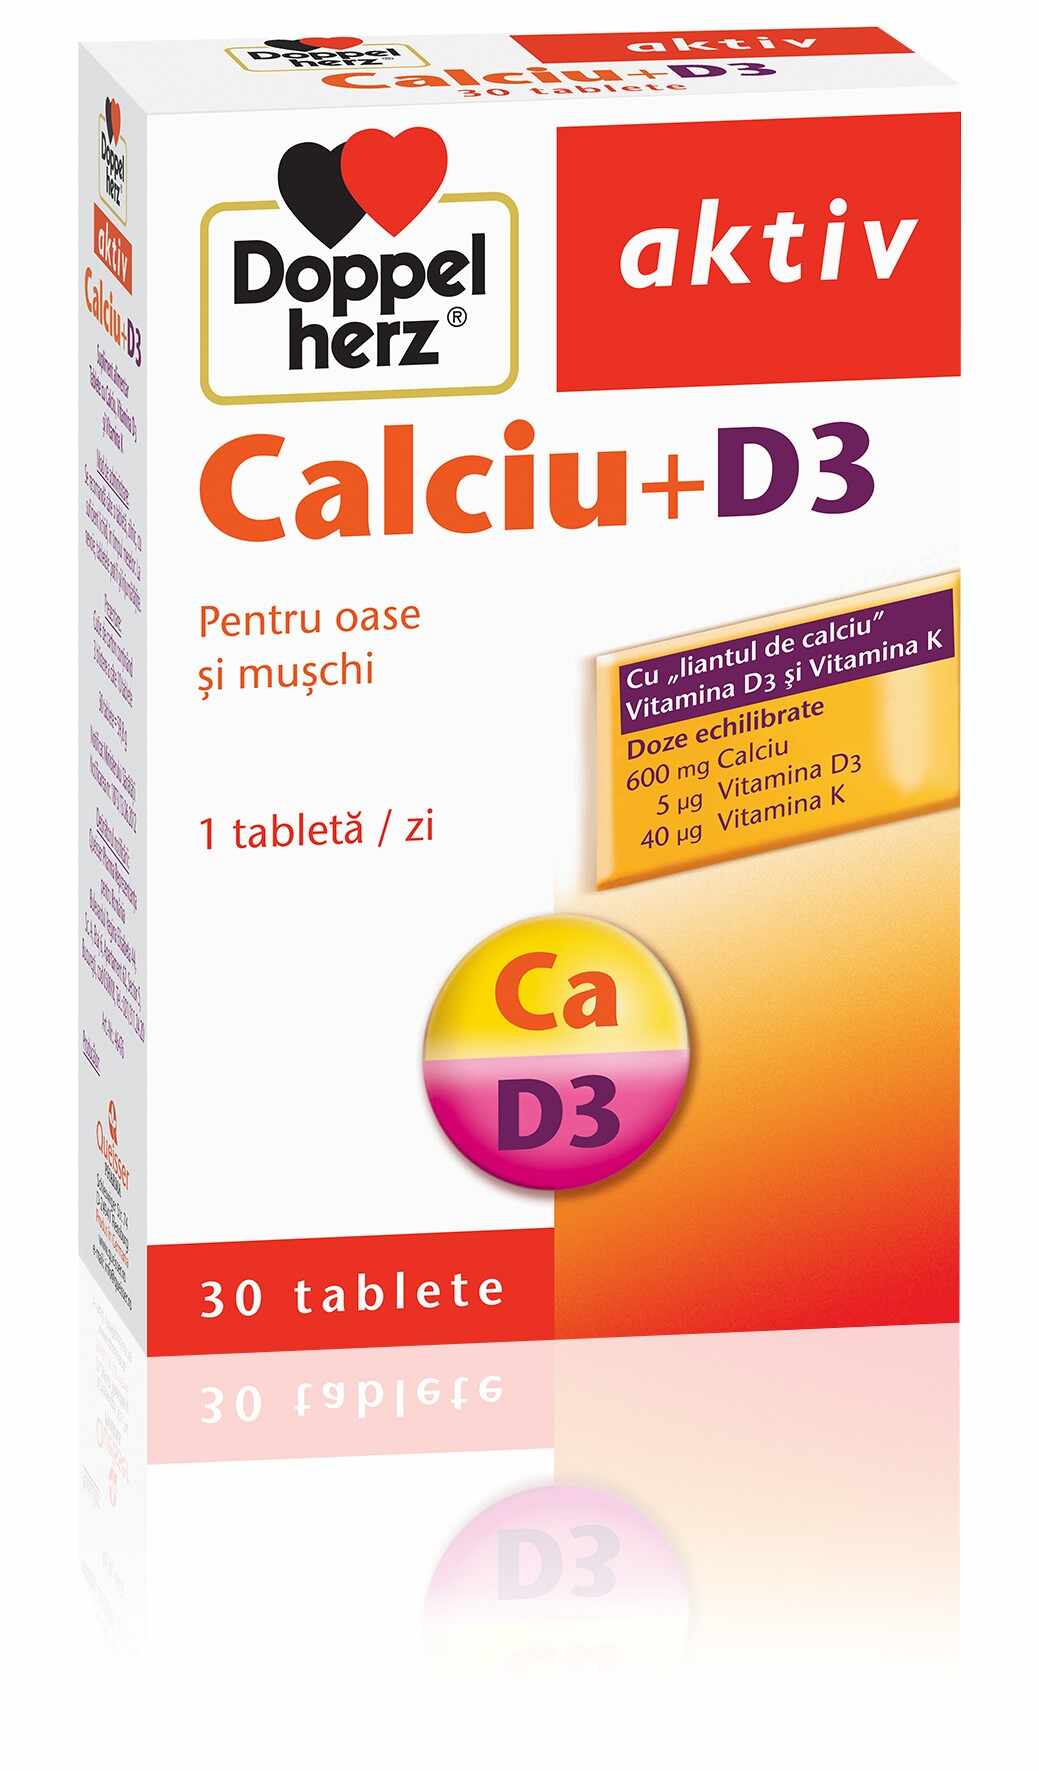 Doppelherz Aktiv Calciu + D3 x 30 tablete